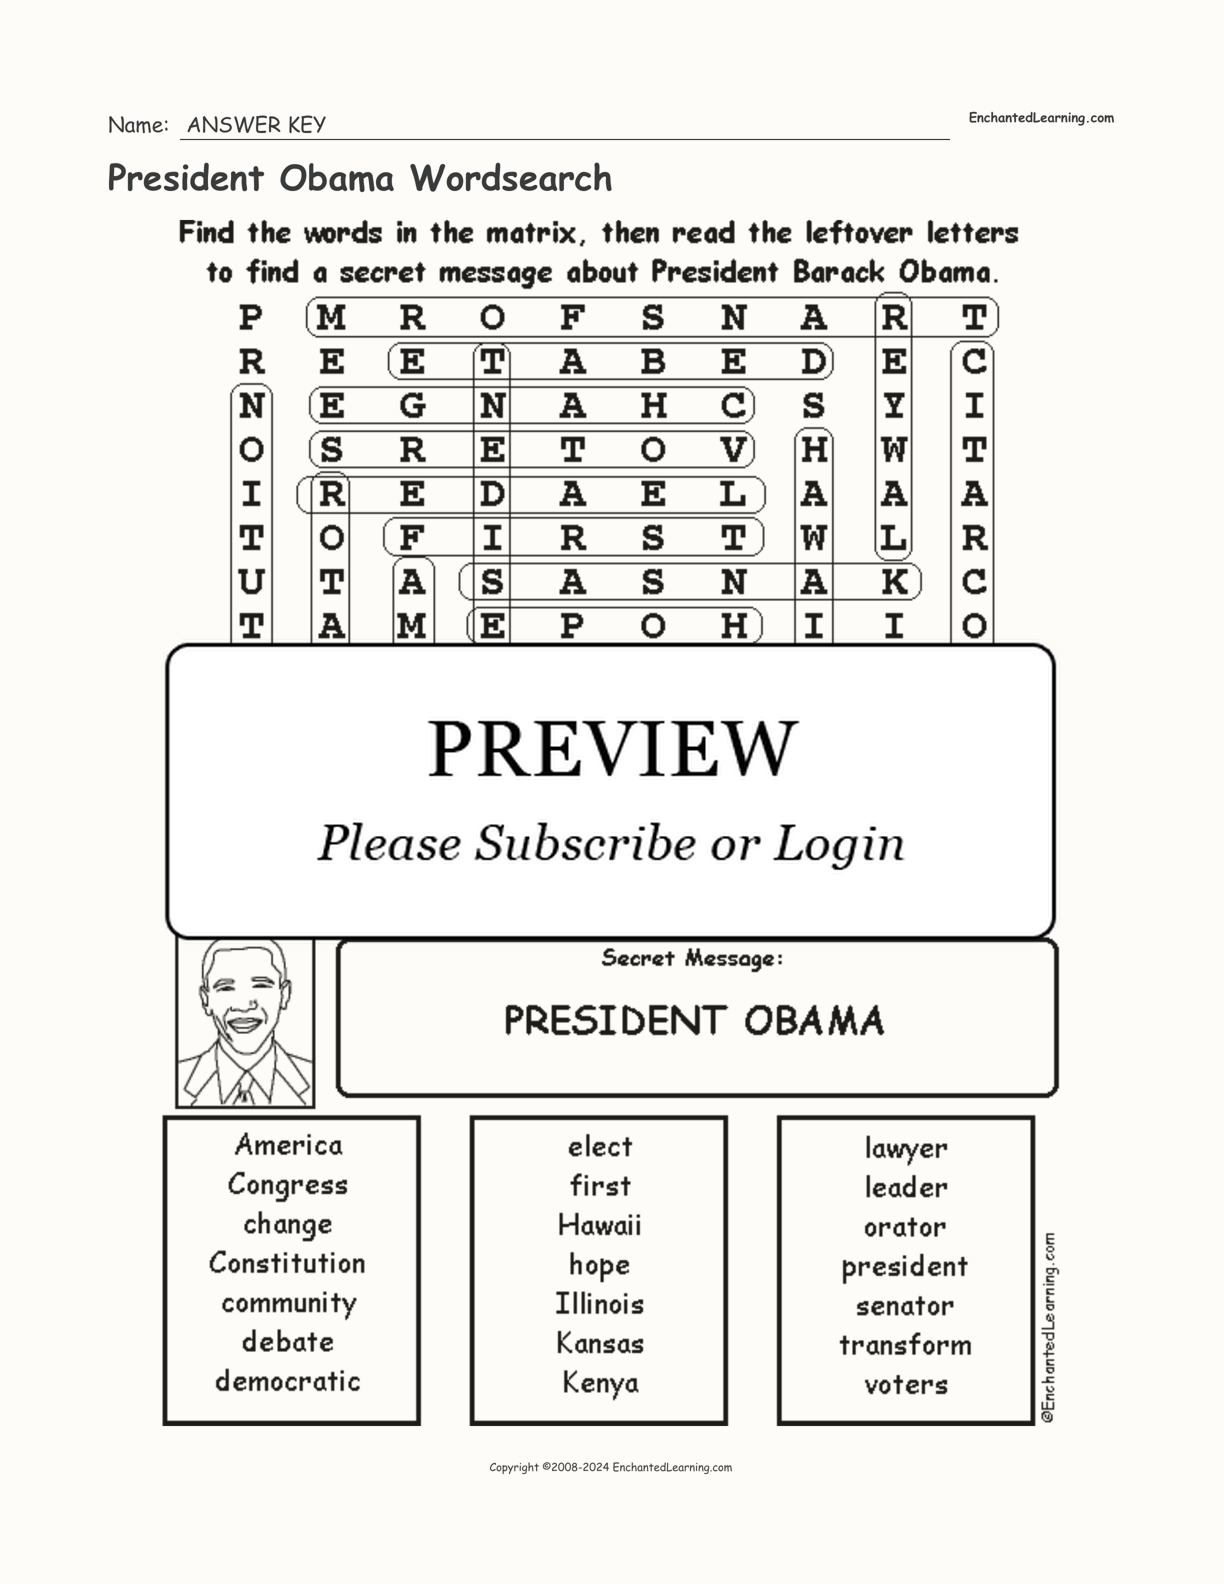 president-barack-obama-wordsearch-enchanted-learning